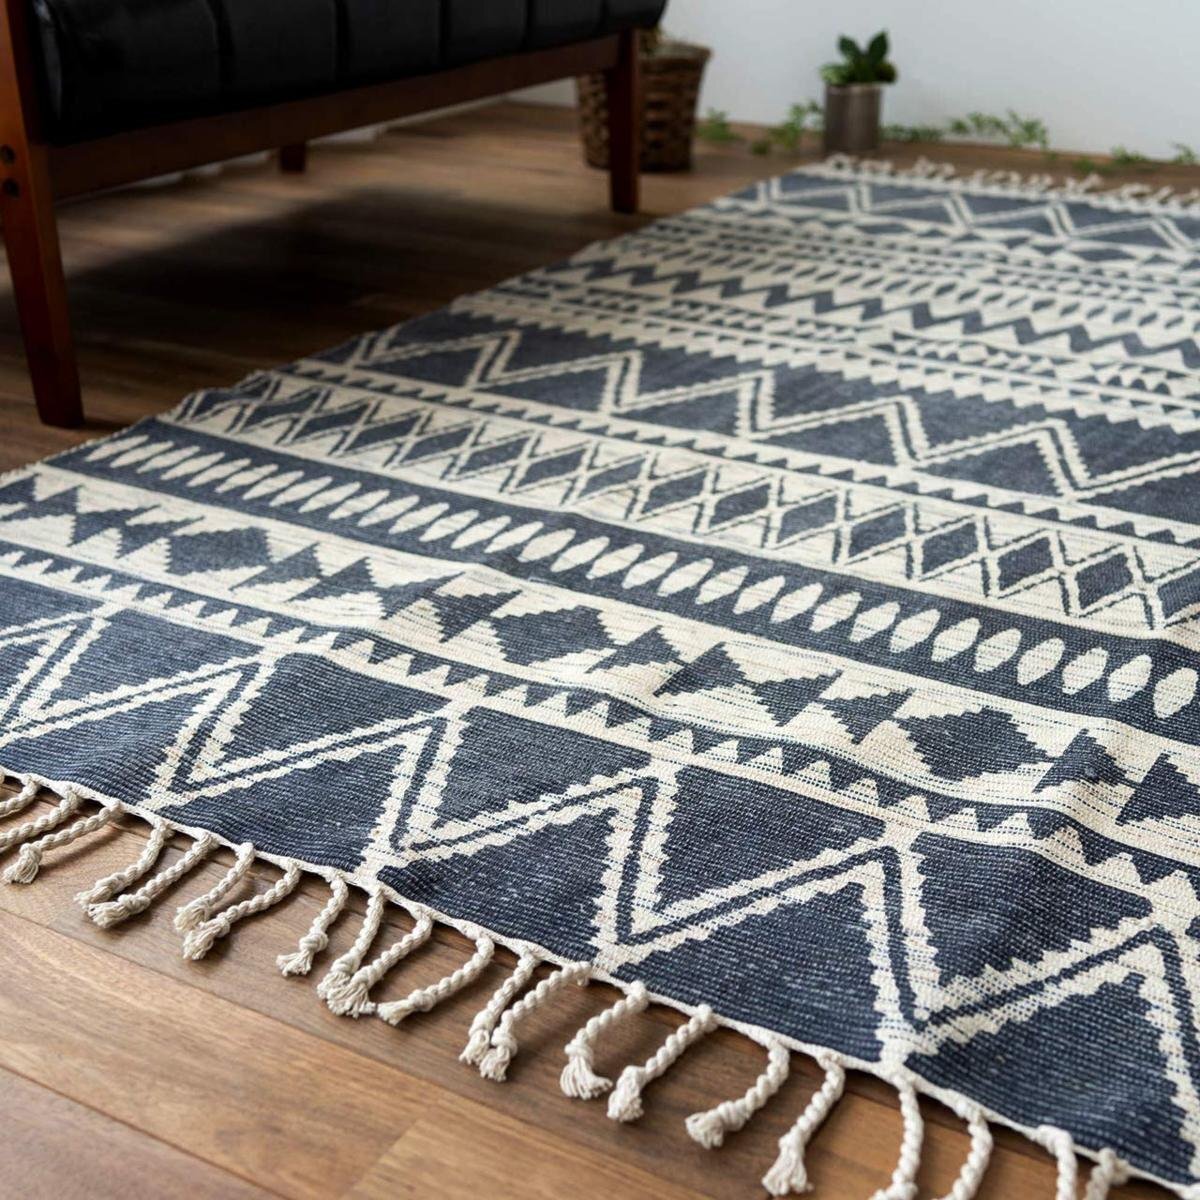 ■■ Sayan Sayan Carpet Native Pattern Handmade Cotton Rug Mat Approx. 100 x 150 cm 1 Tatami Navy, furniture, interior, carpet, rug, mat, Carpet general